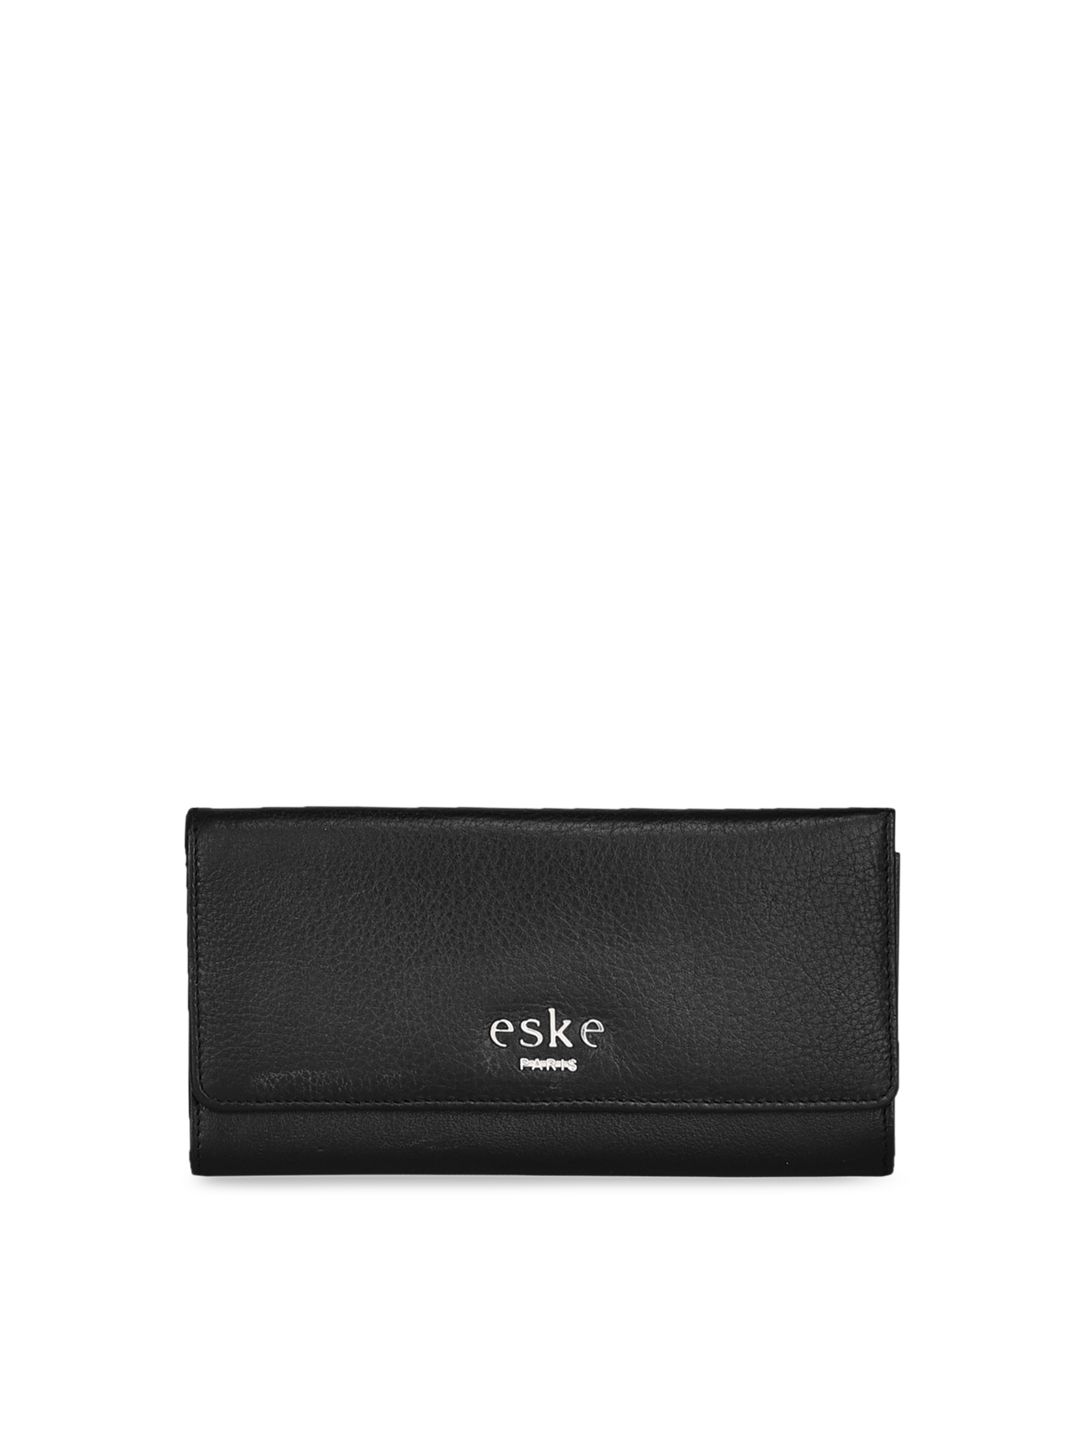 Eske Women Black Solid Two Fold Wallet Price in India